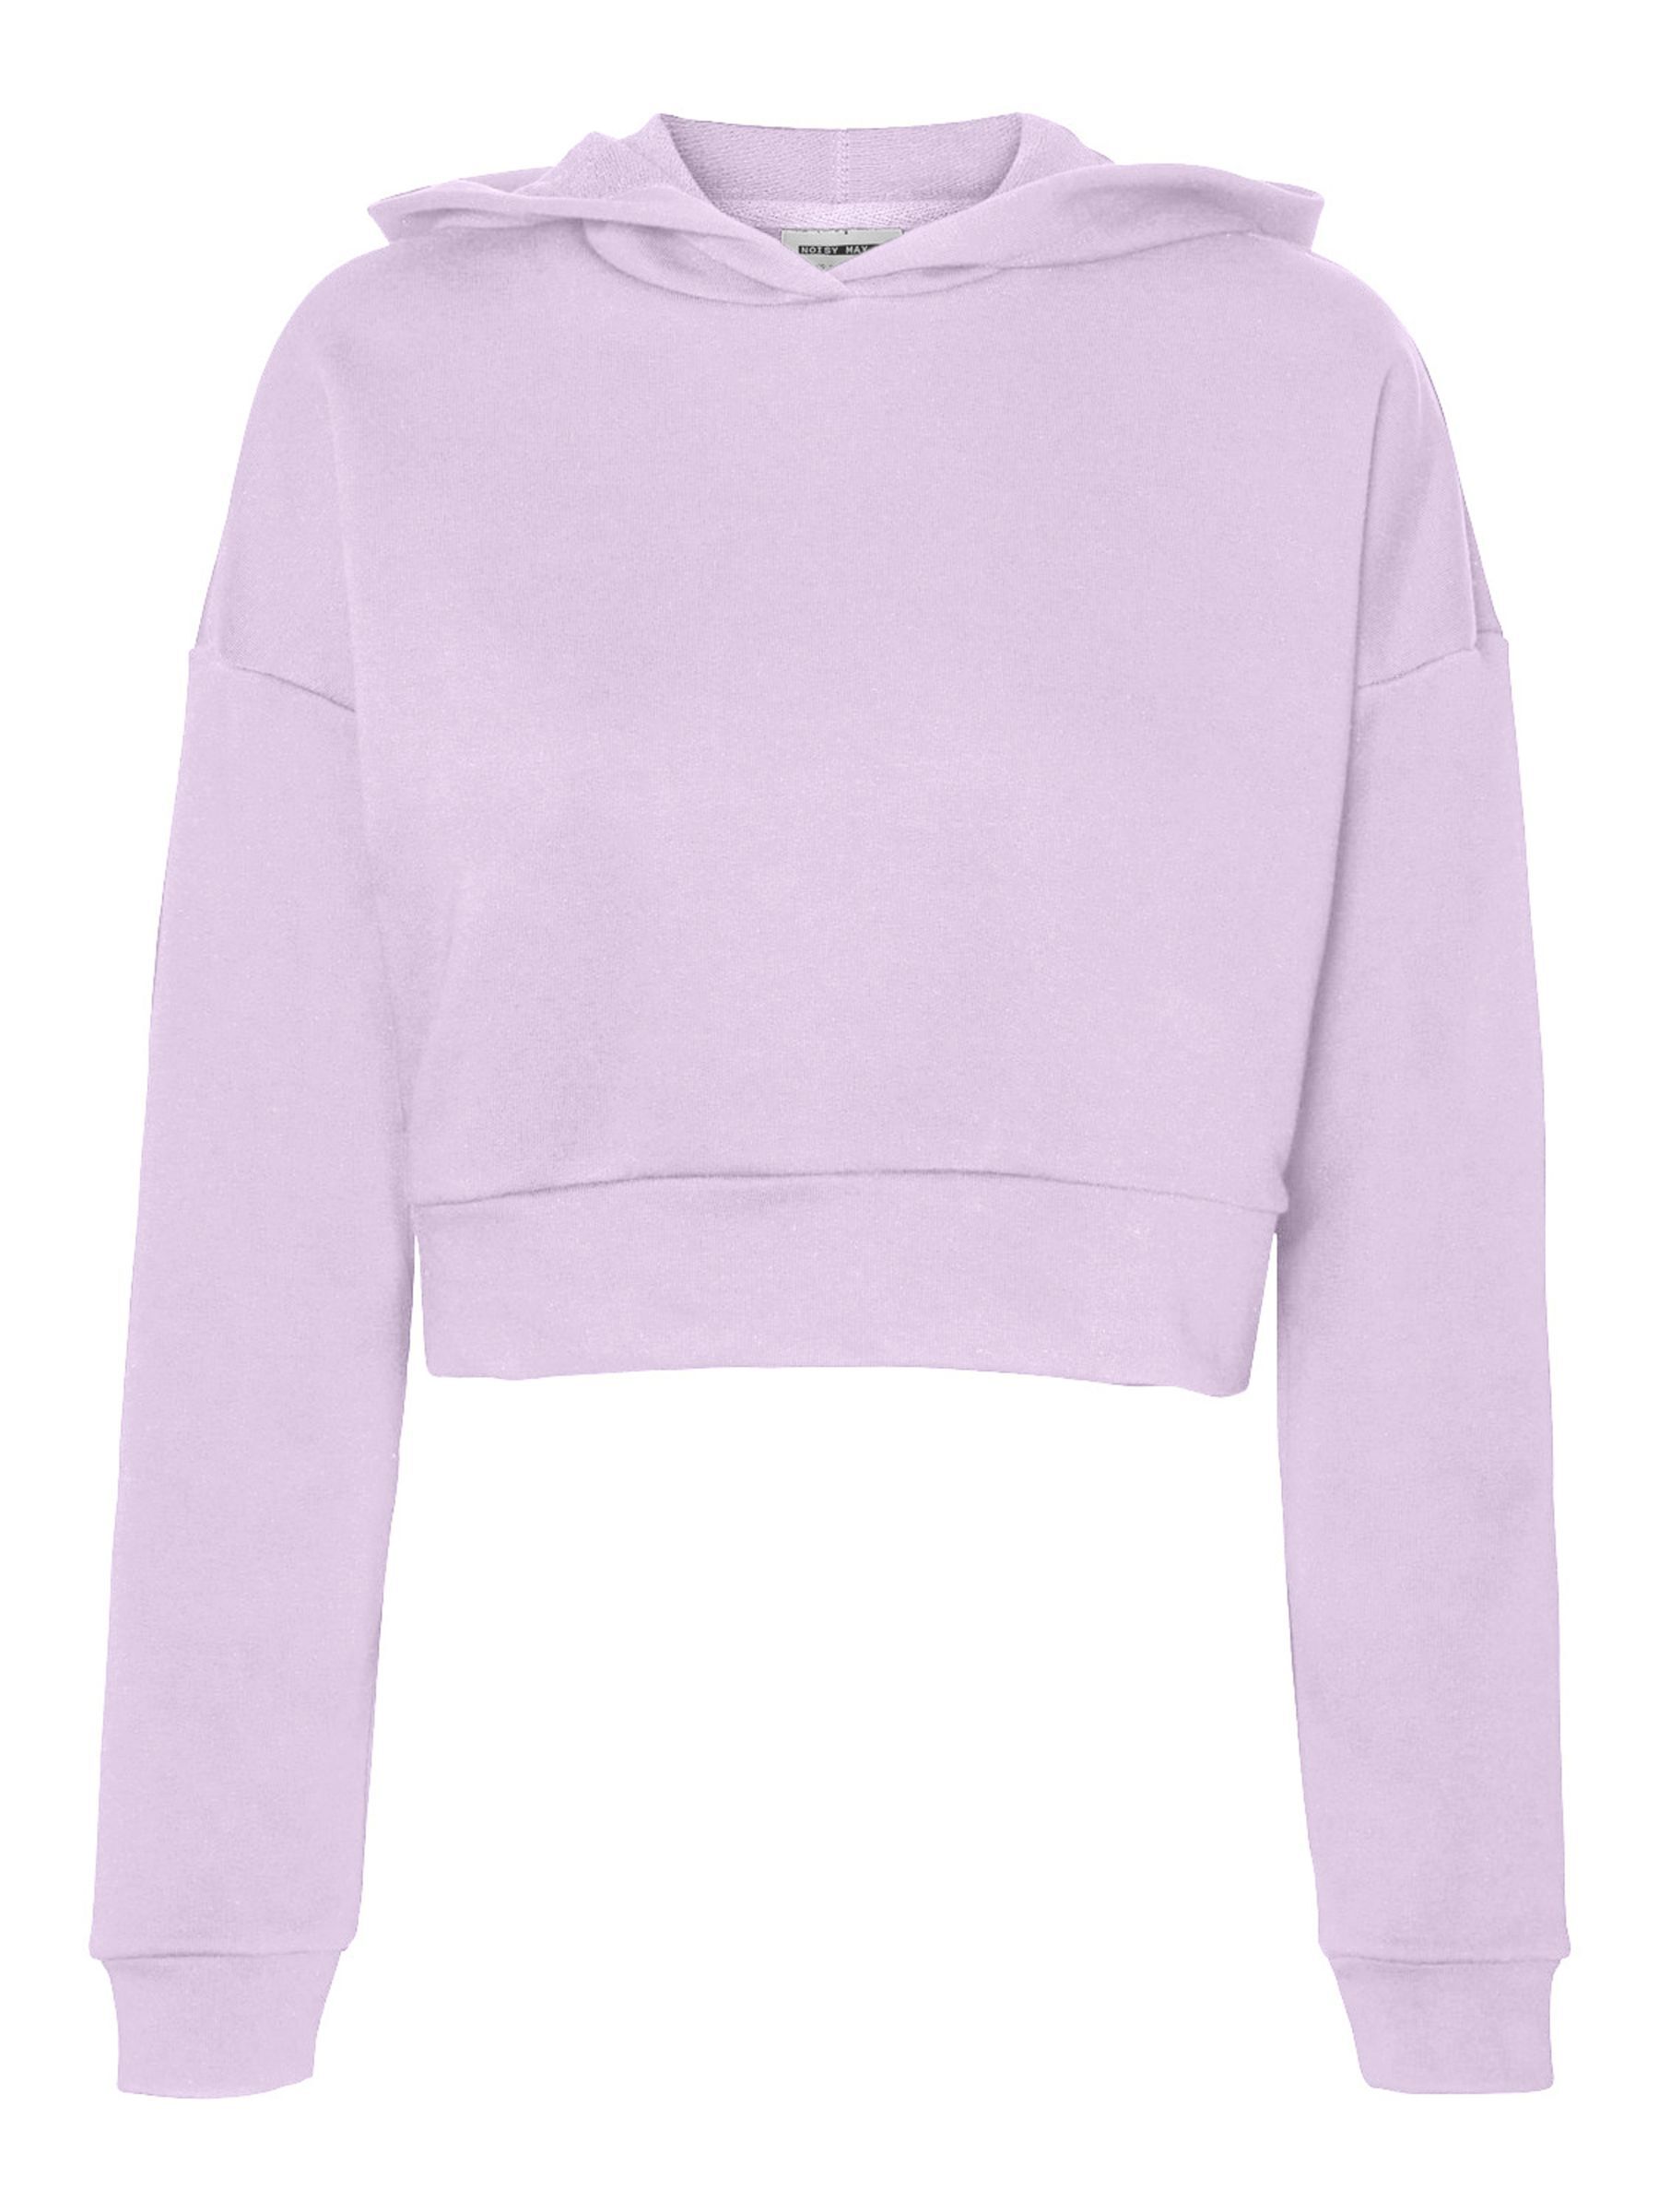 purple cropped sweatshirt